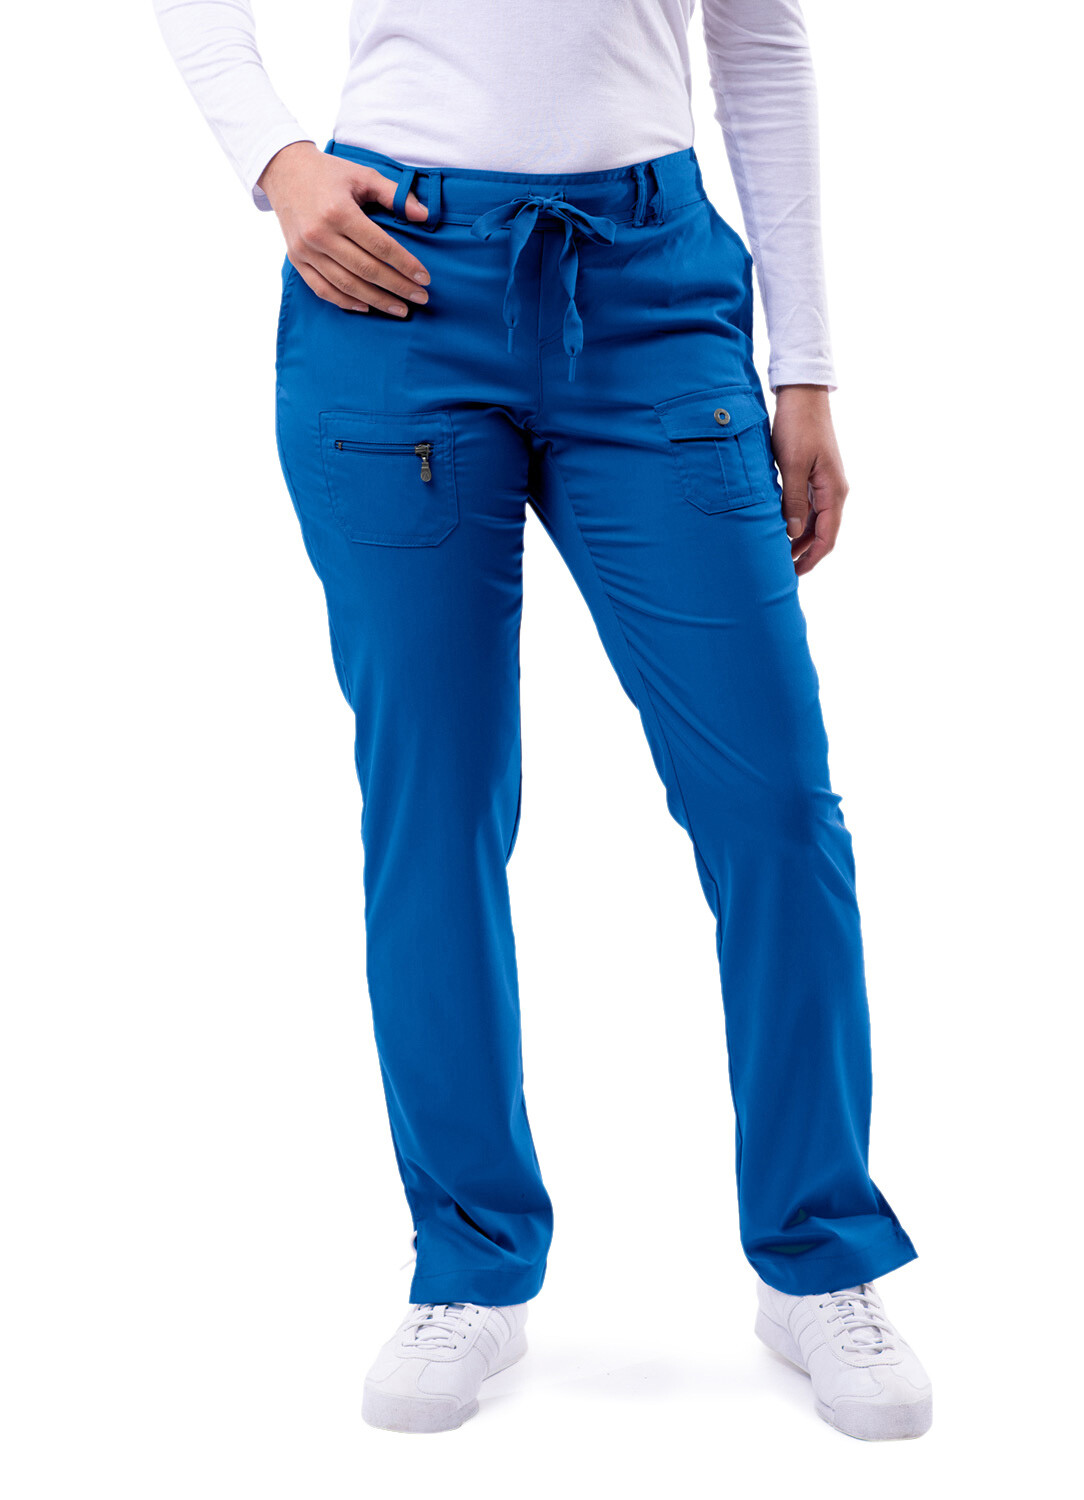 Adar Pro Women’s Slim Fit 6 Pocket Pant